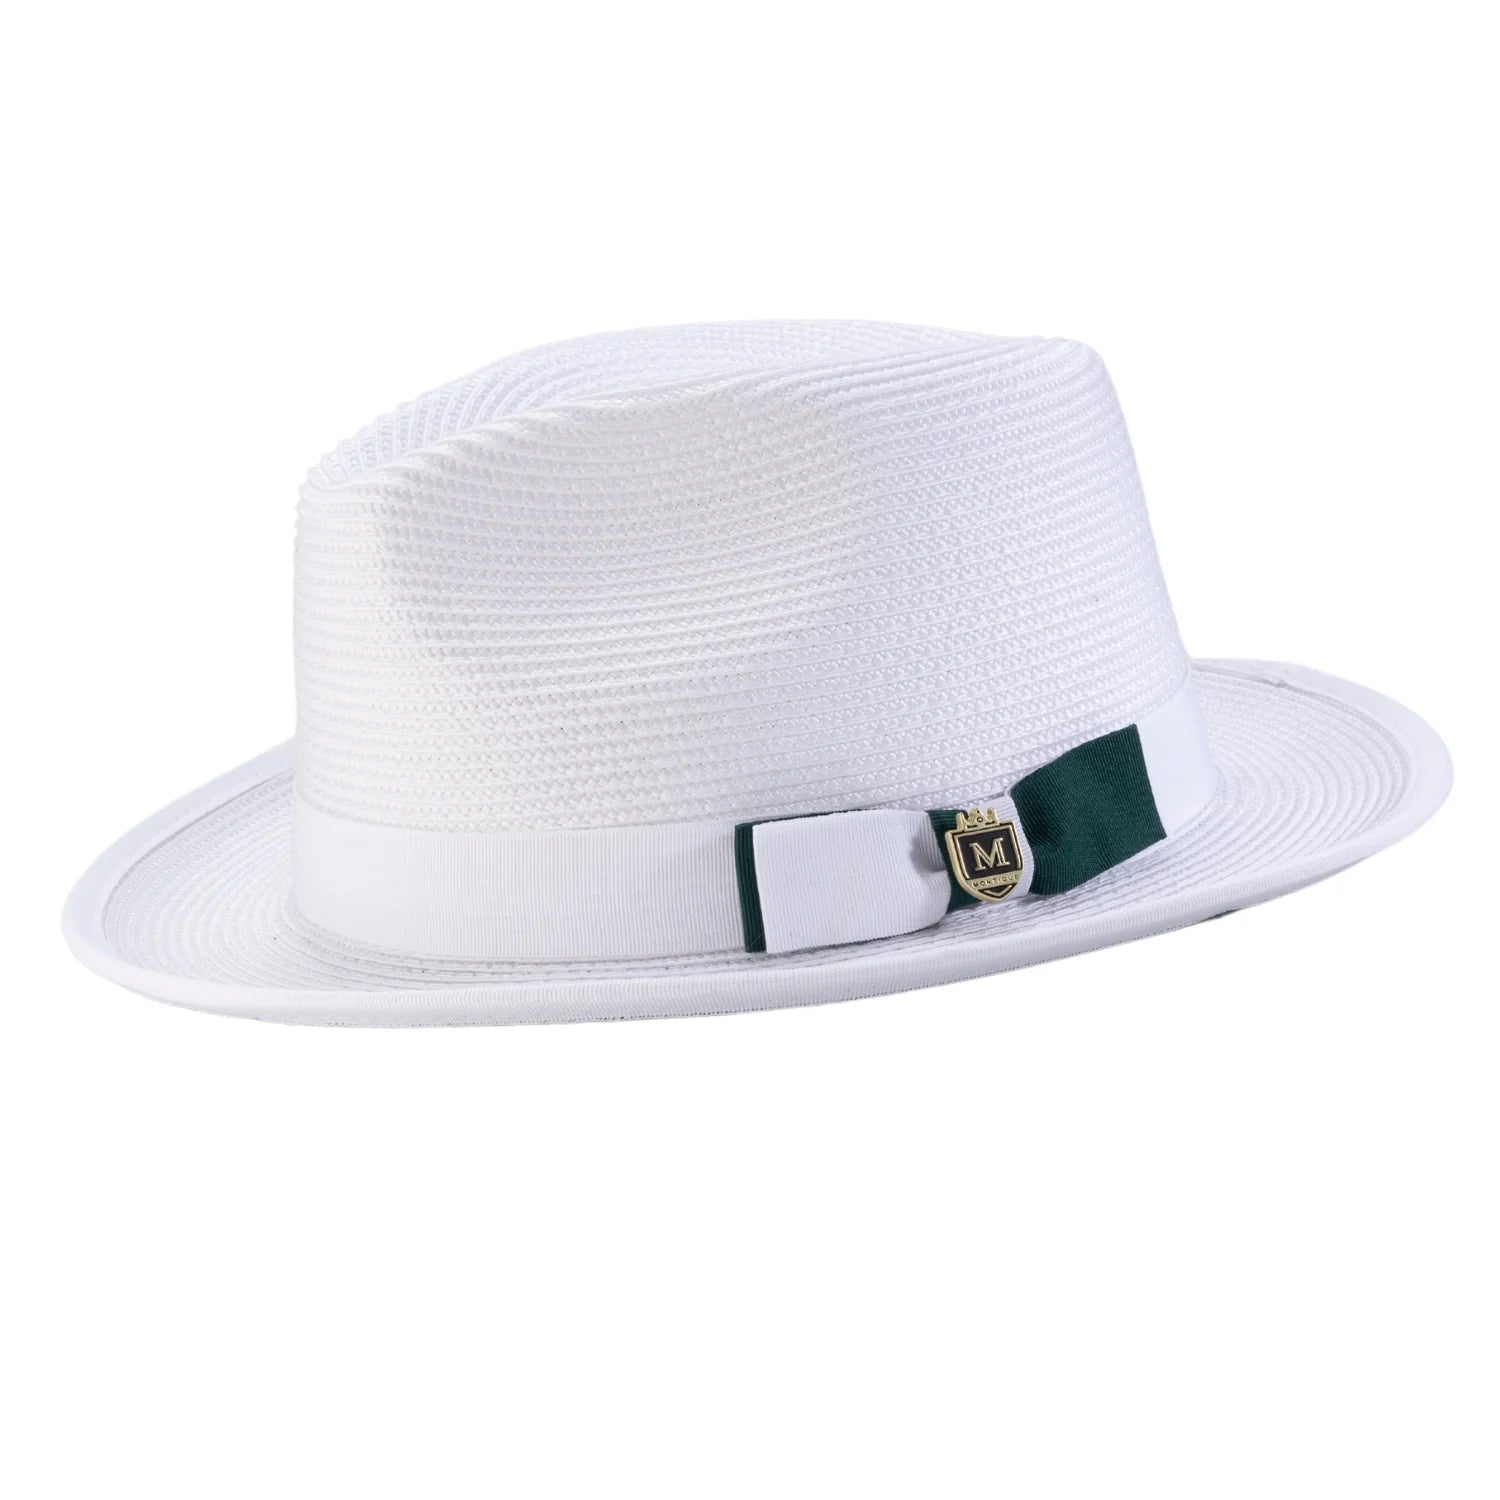 Braided Stingy Brim Pinch Fedora Hat - White with Emerald Bottom